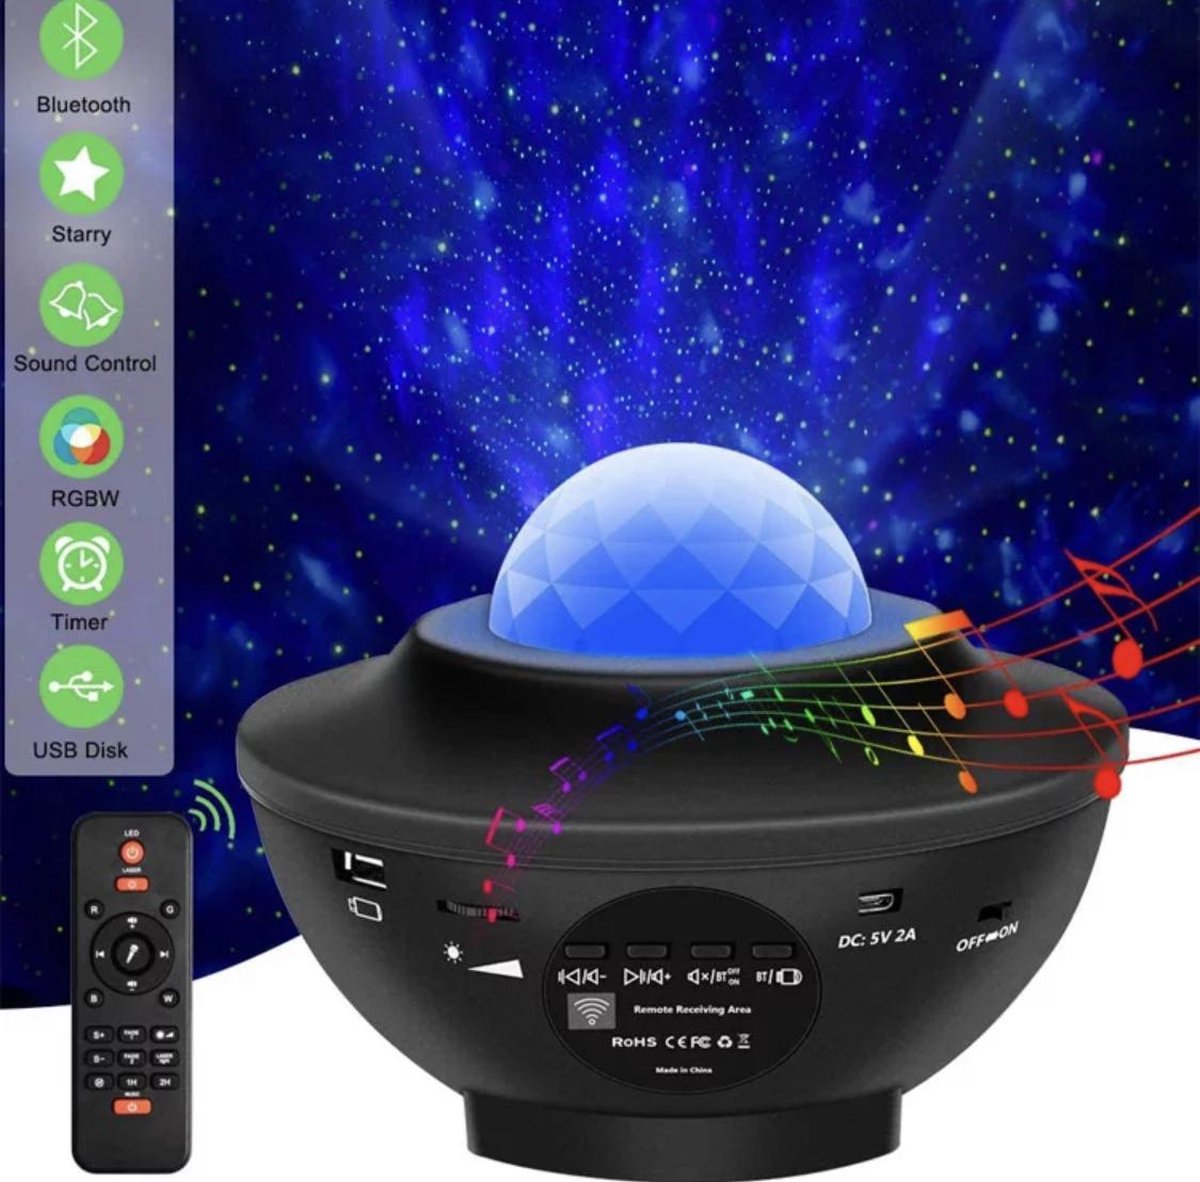 bol.com | Sterrenprojector Bluetooth - Sterrenlamp - Galaxy projector